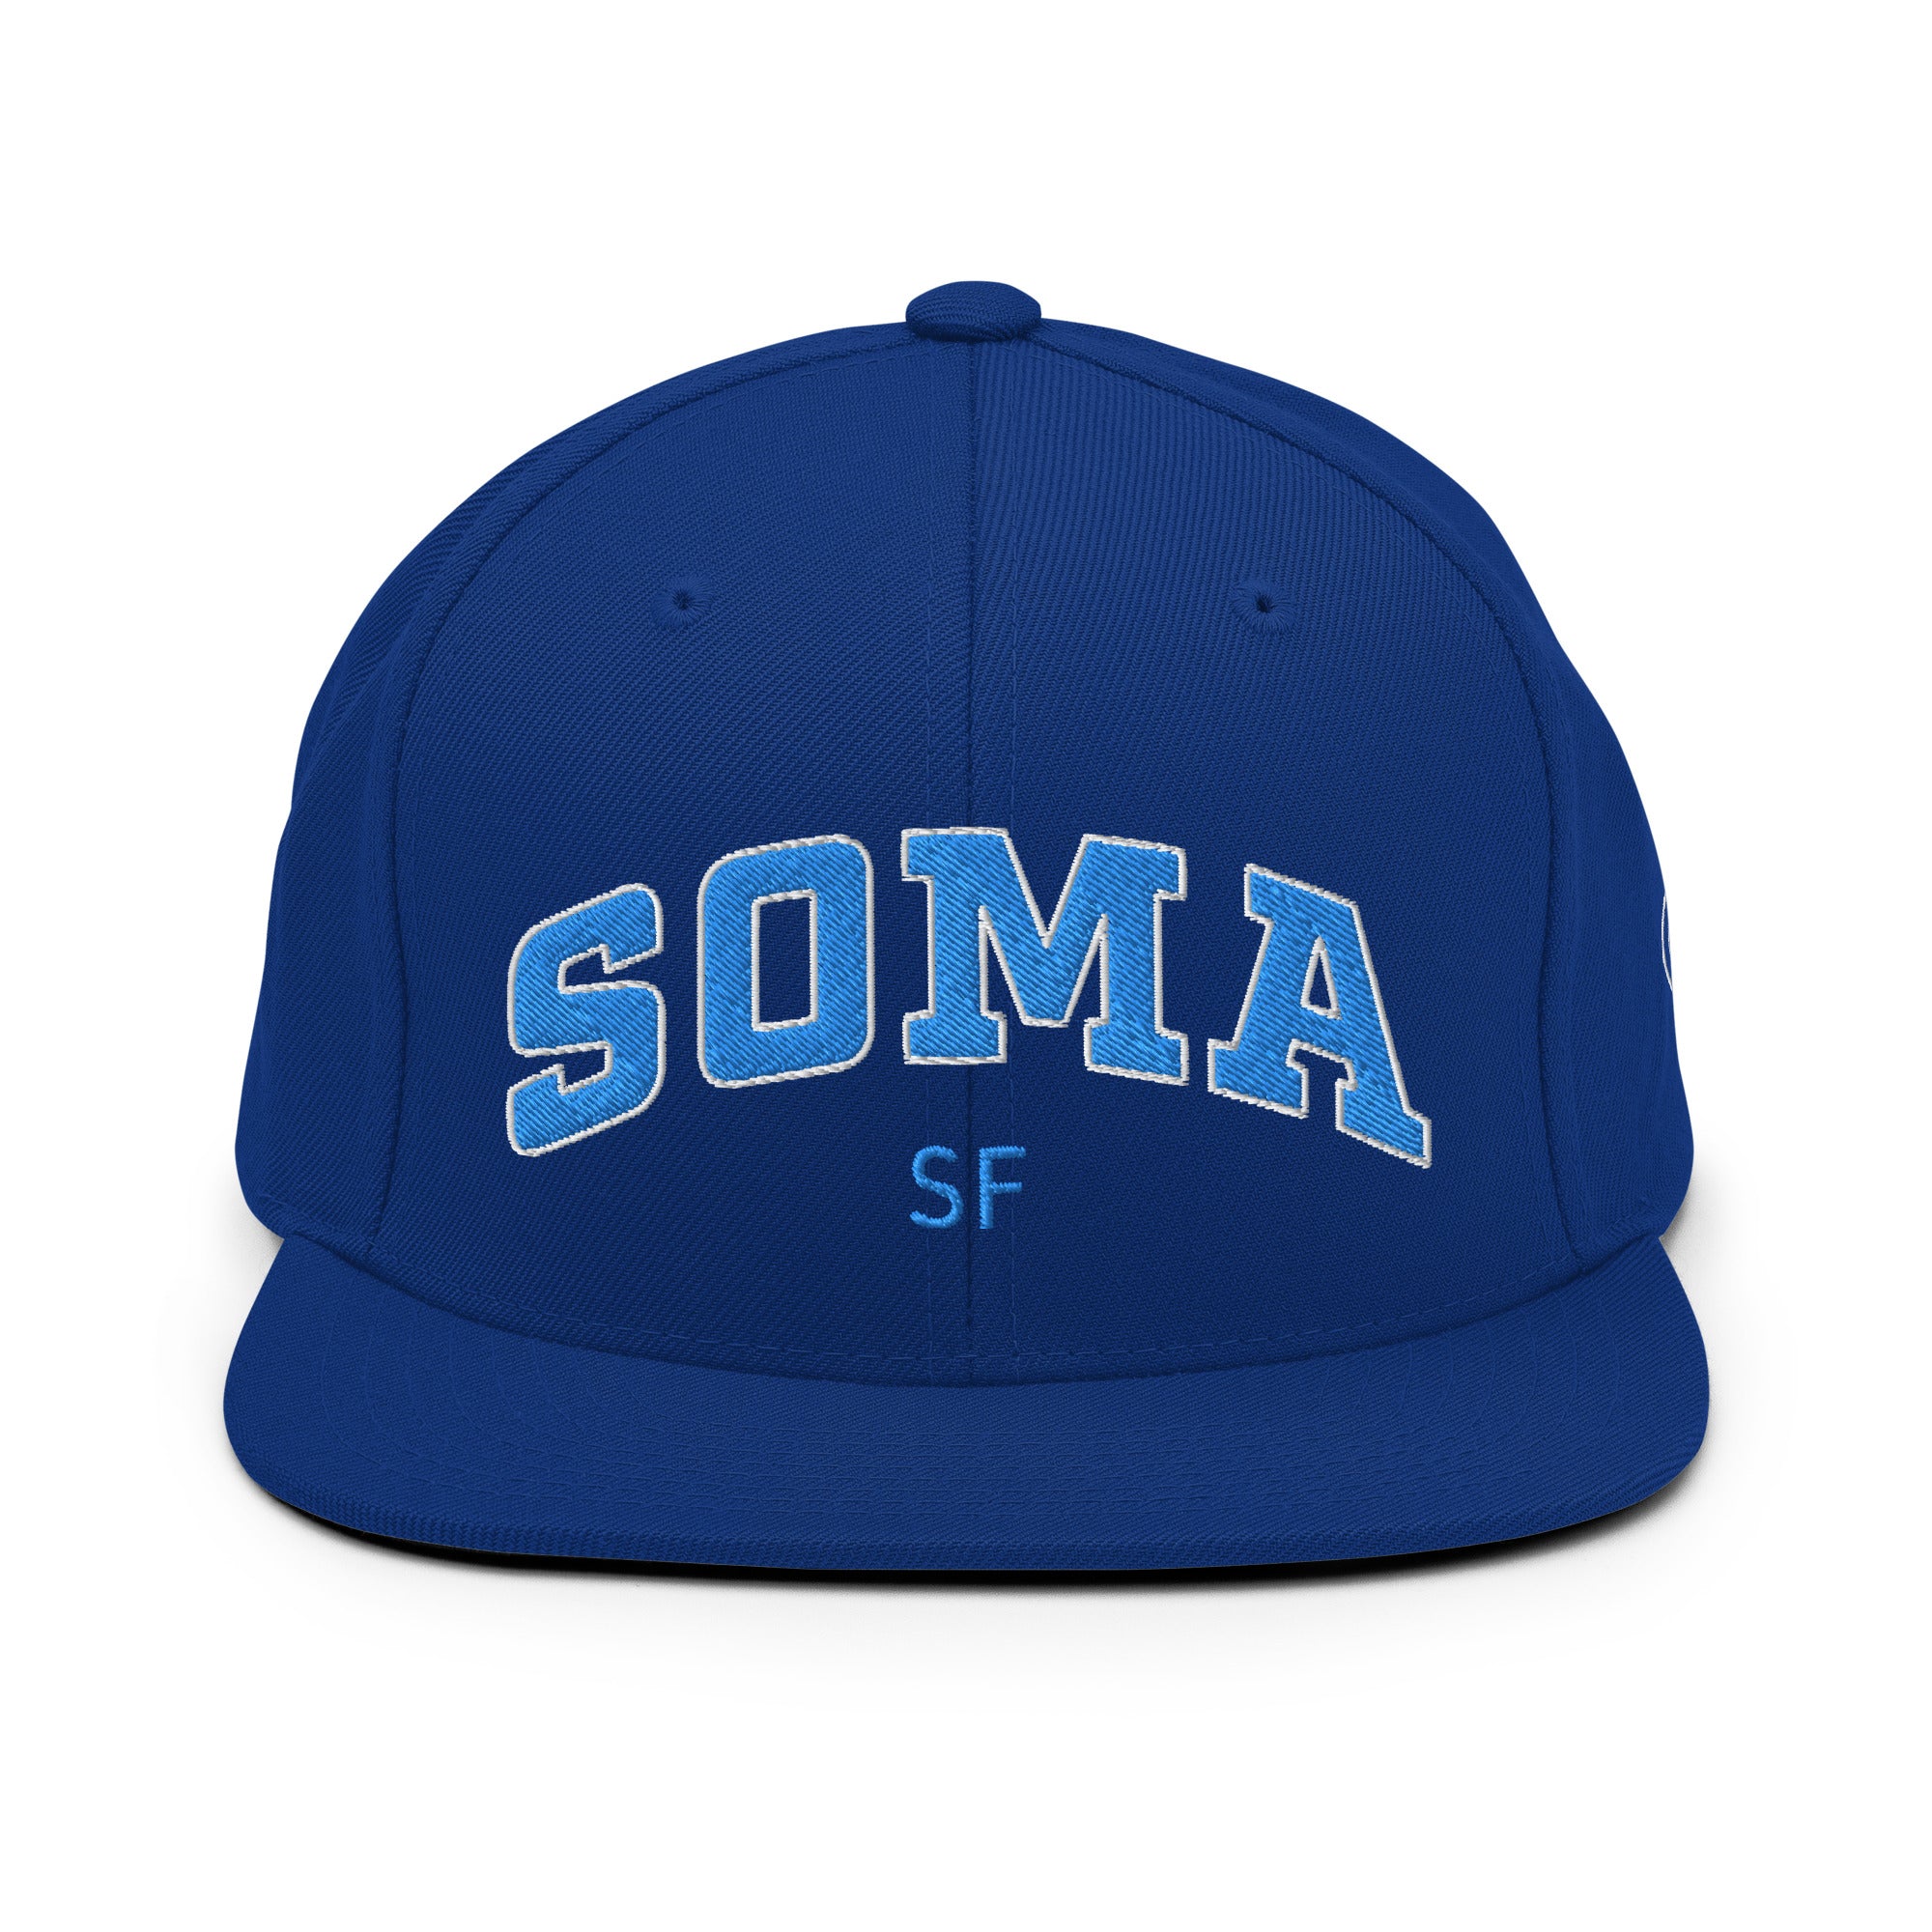 Bold Snapback Hat - SoMa | San Francisco, CA